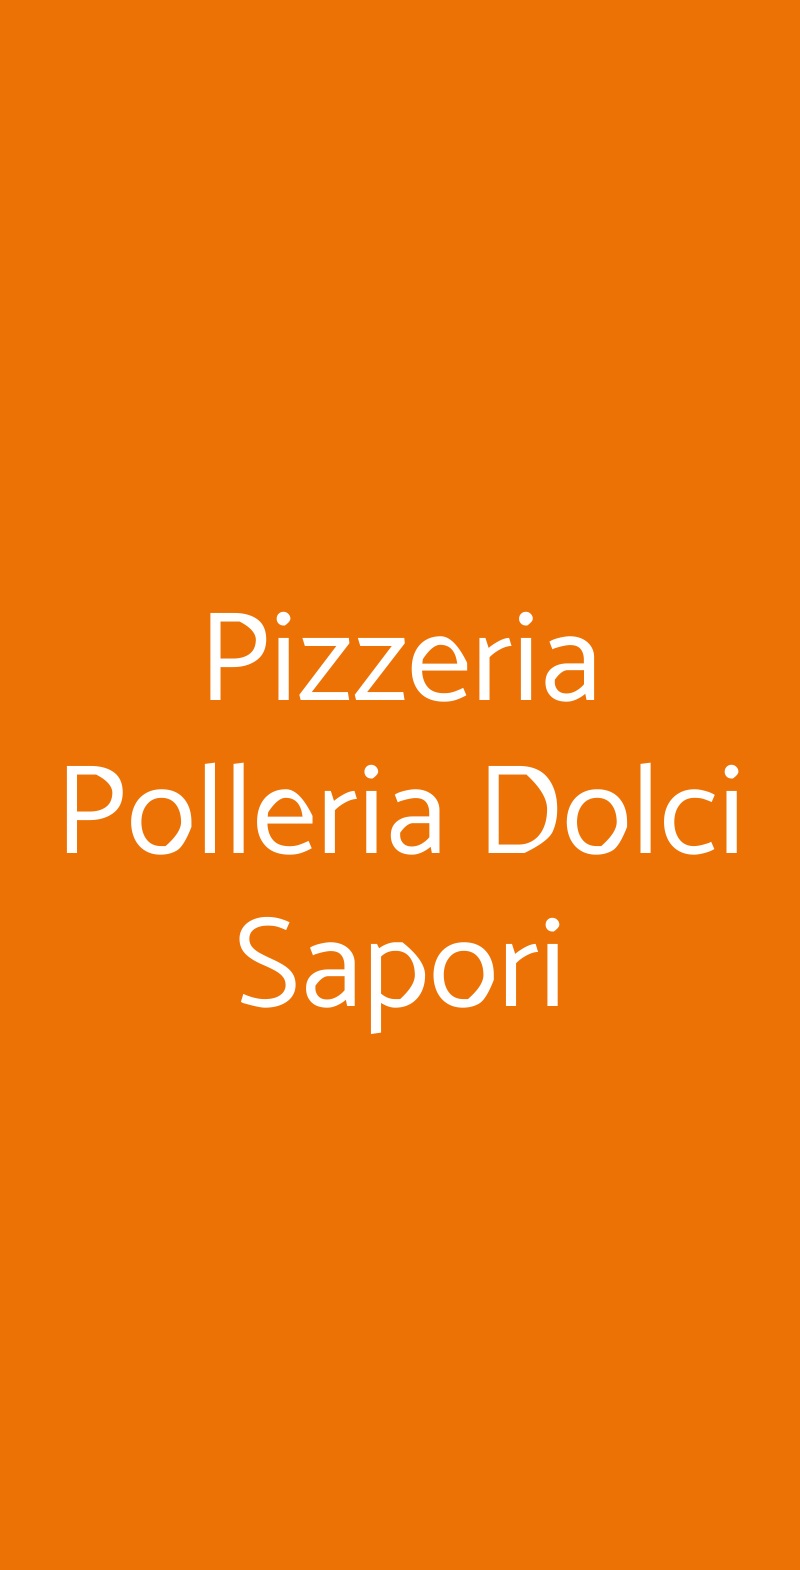 Pizzeria Polleria Dolci Sapori Palermo menù 1 pagina